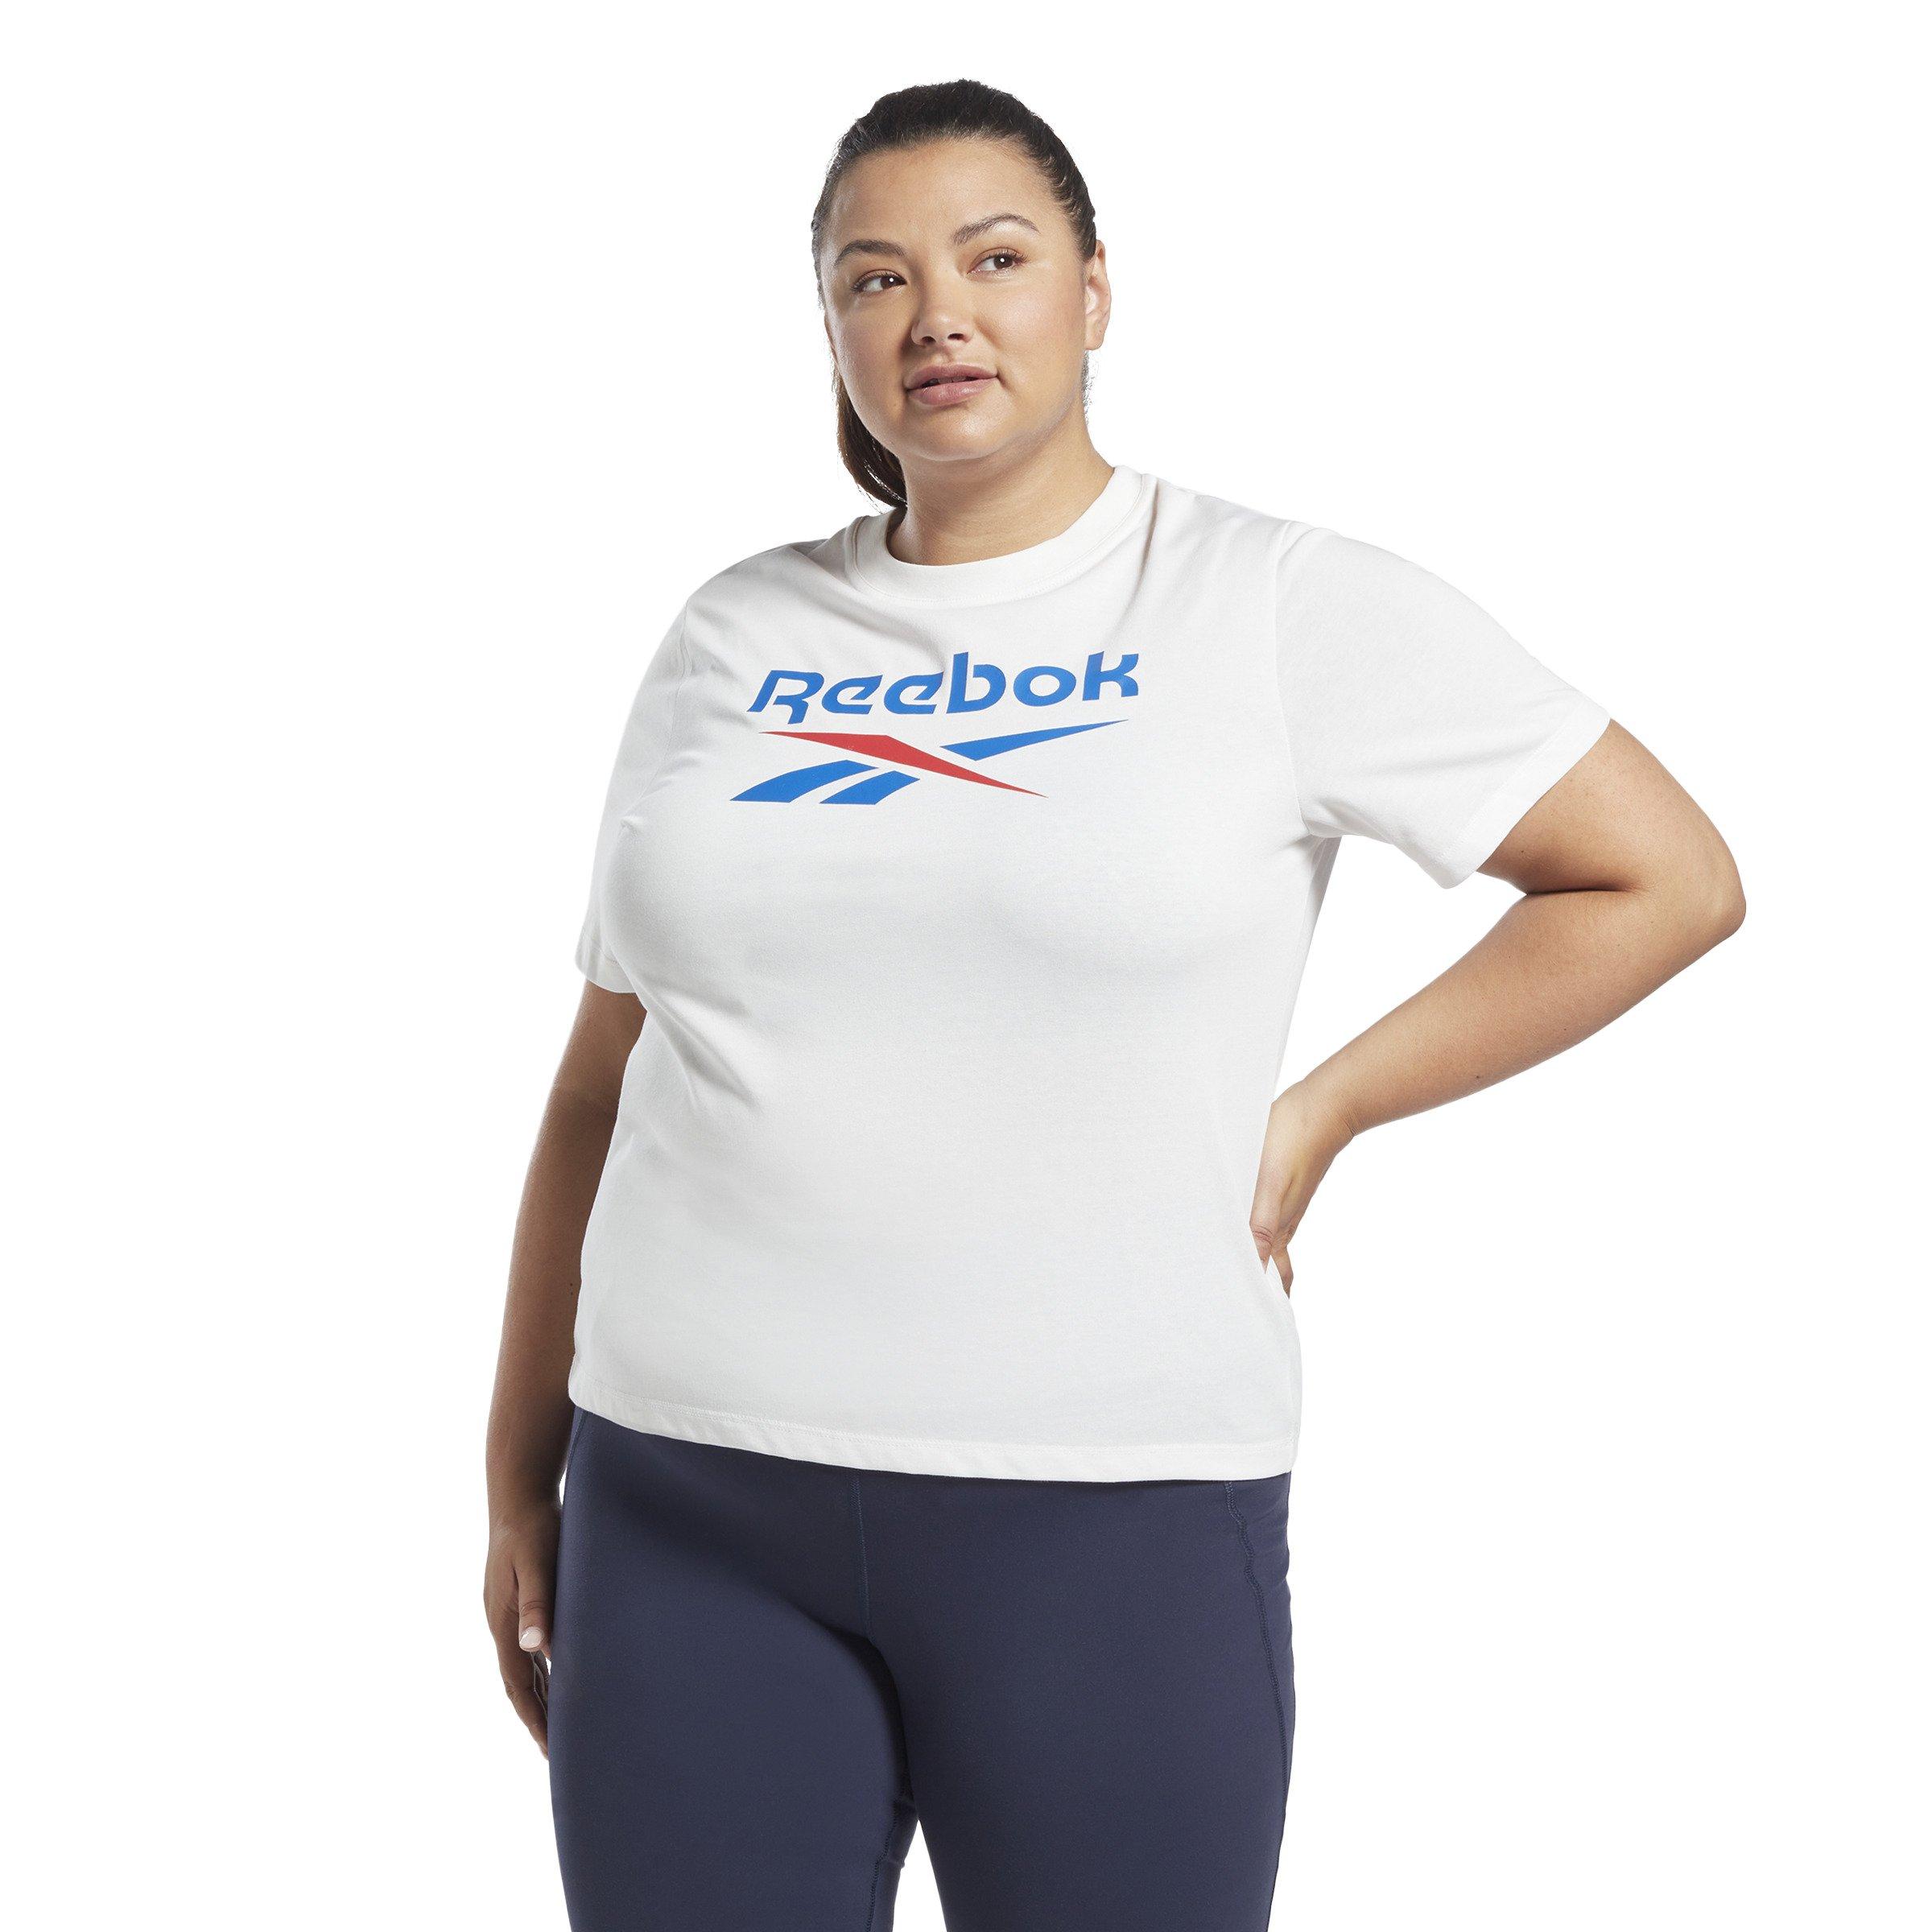 Reebok Apparel Women Reebok Identity T-Shirt White